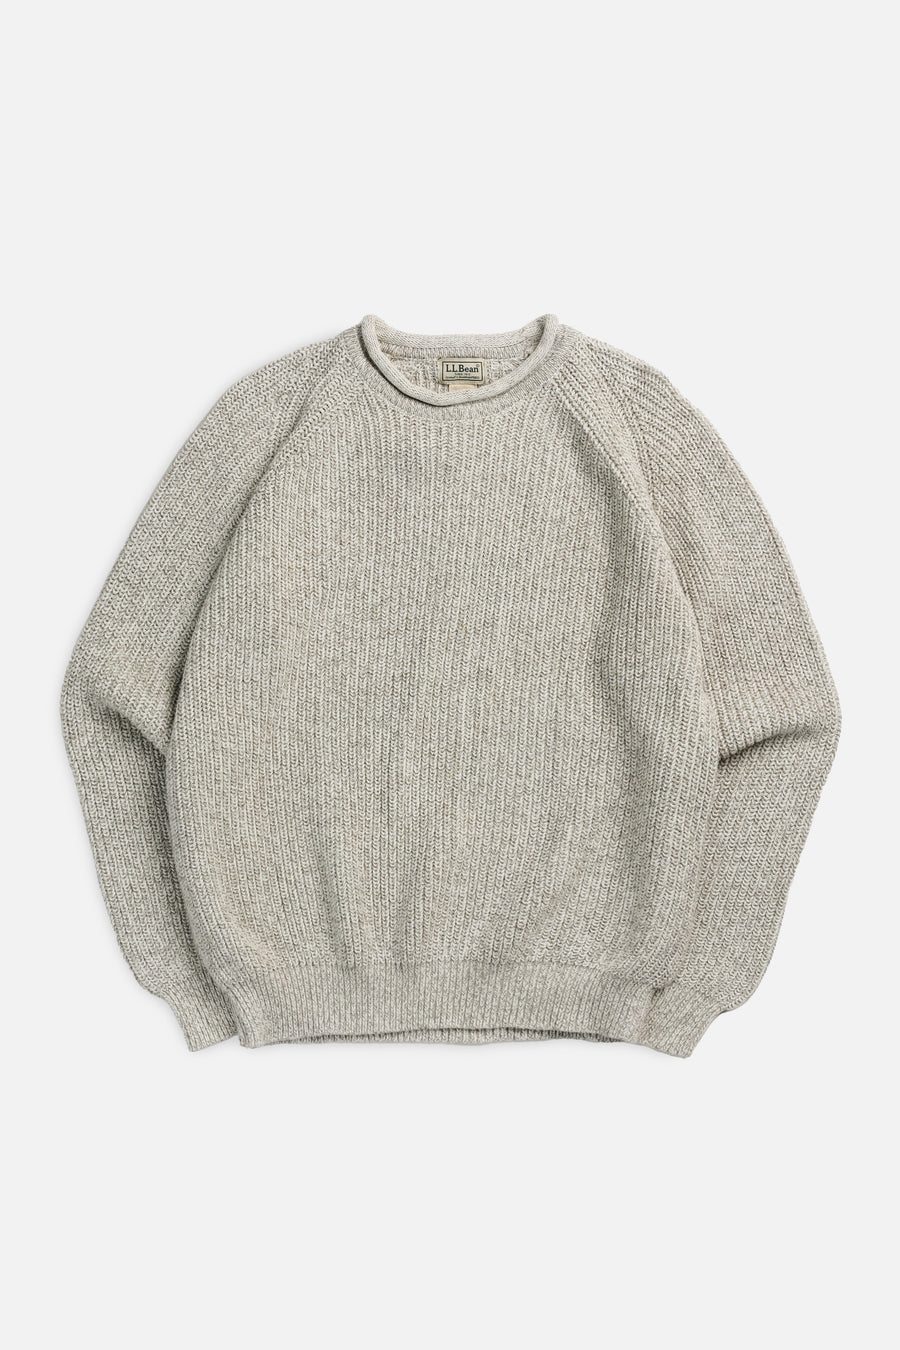 Vintage L.L. Bean Knit Sweater - S